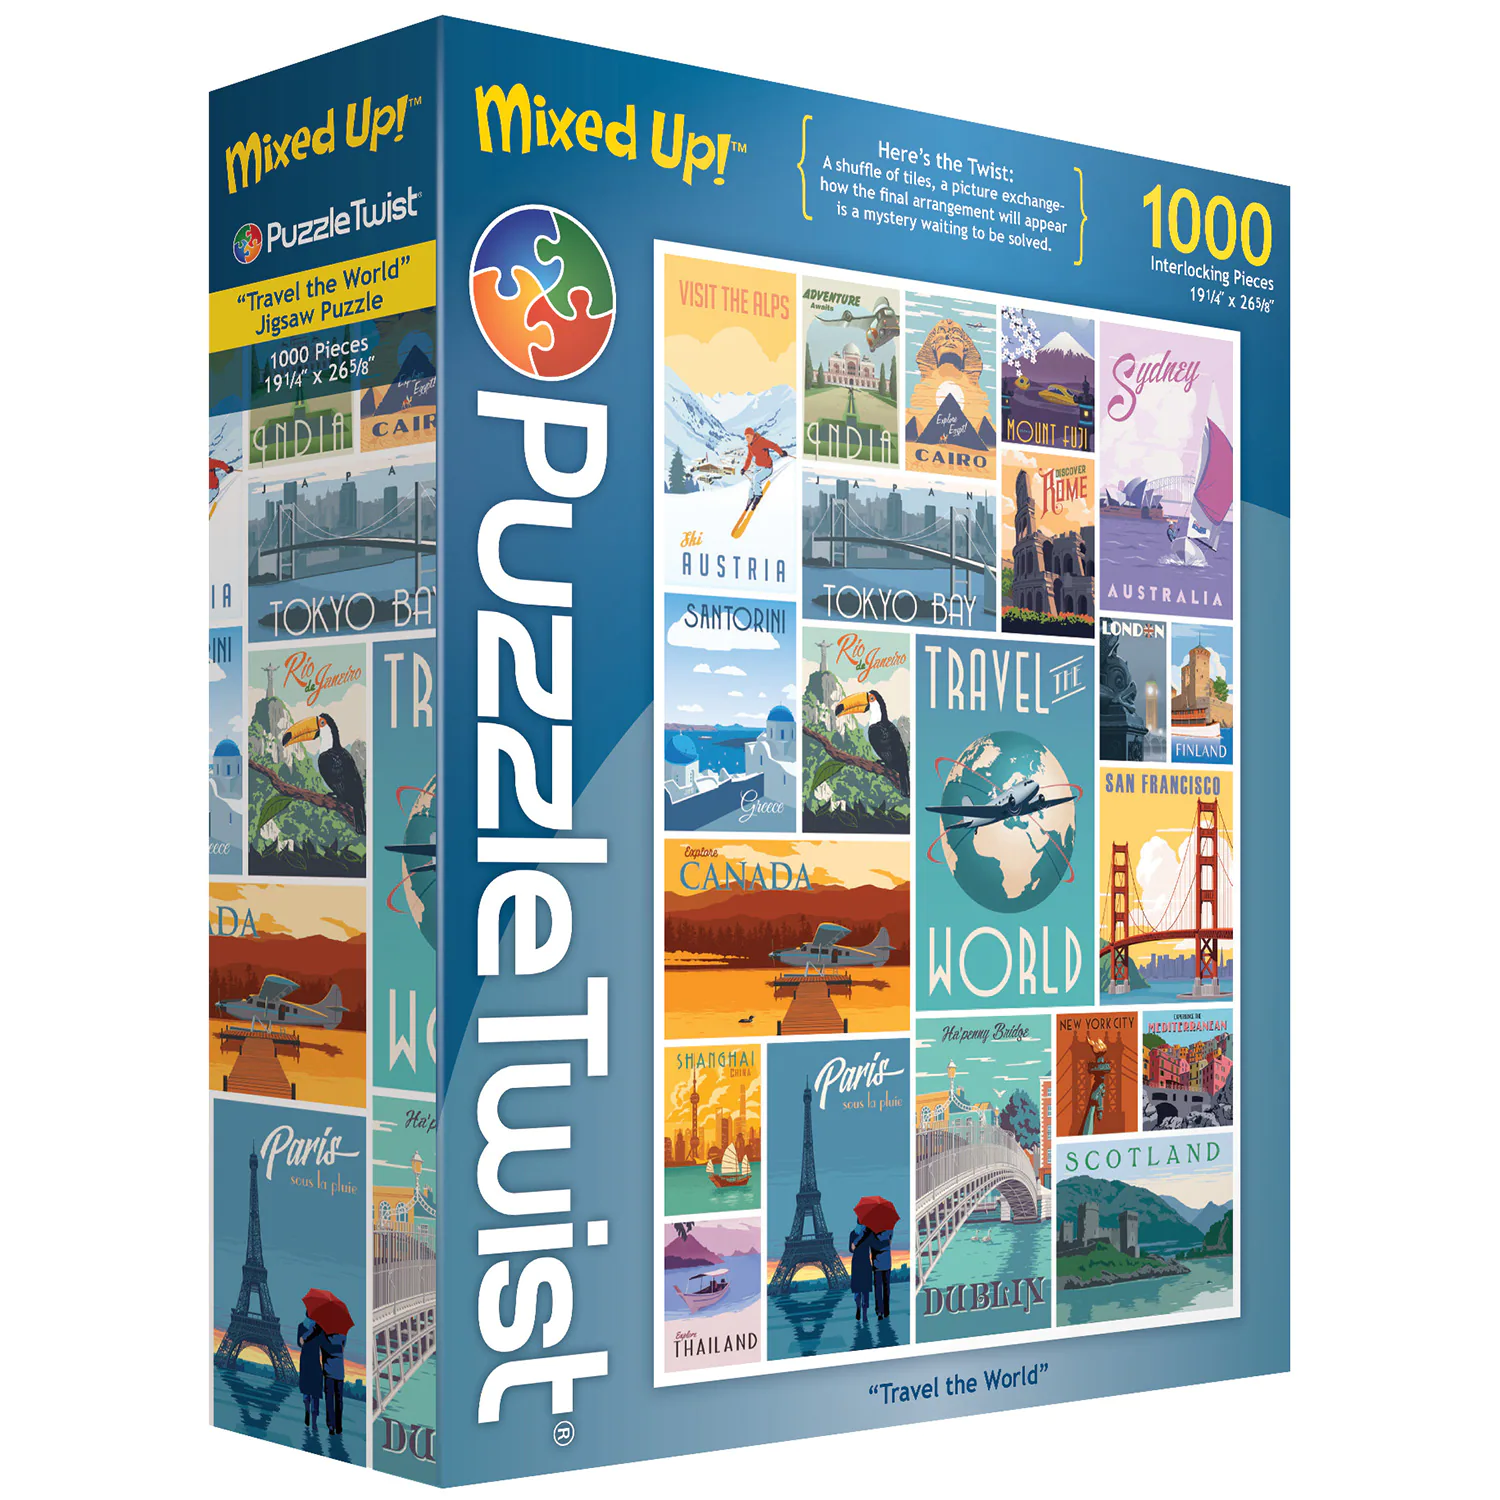 Maynards-Puzzle Twist - Travel the World - 1,000 Piece Puzzle-MA10610-Legacy Toys